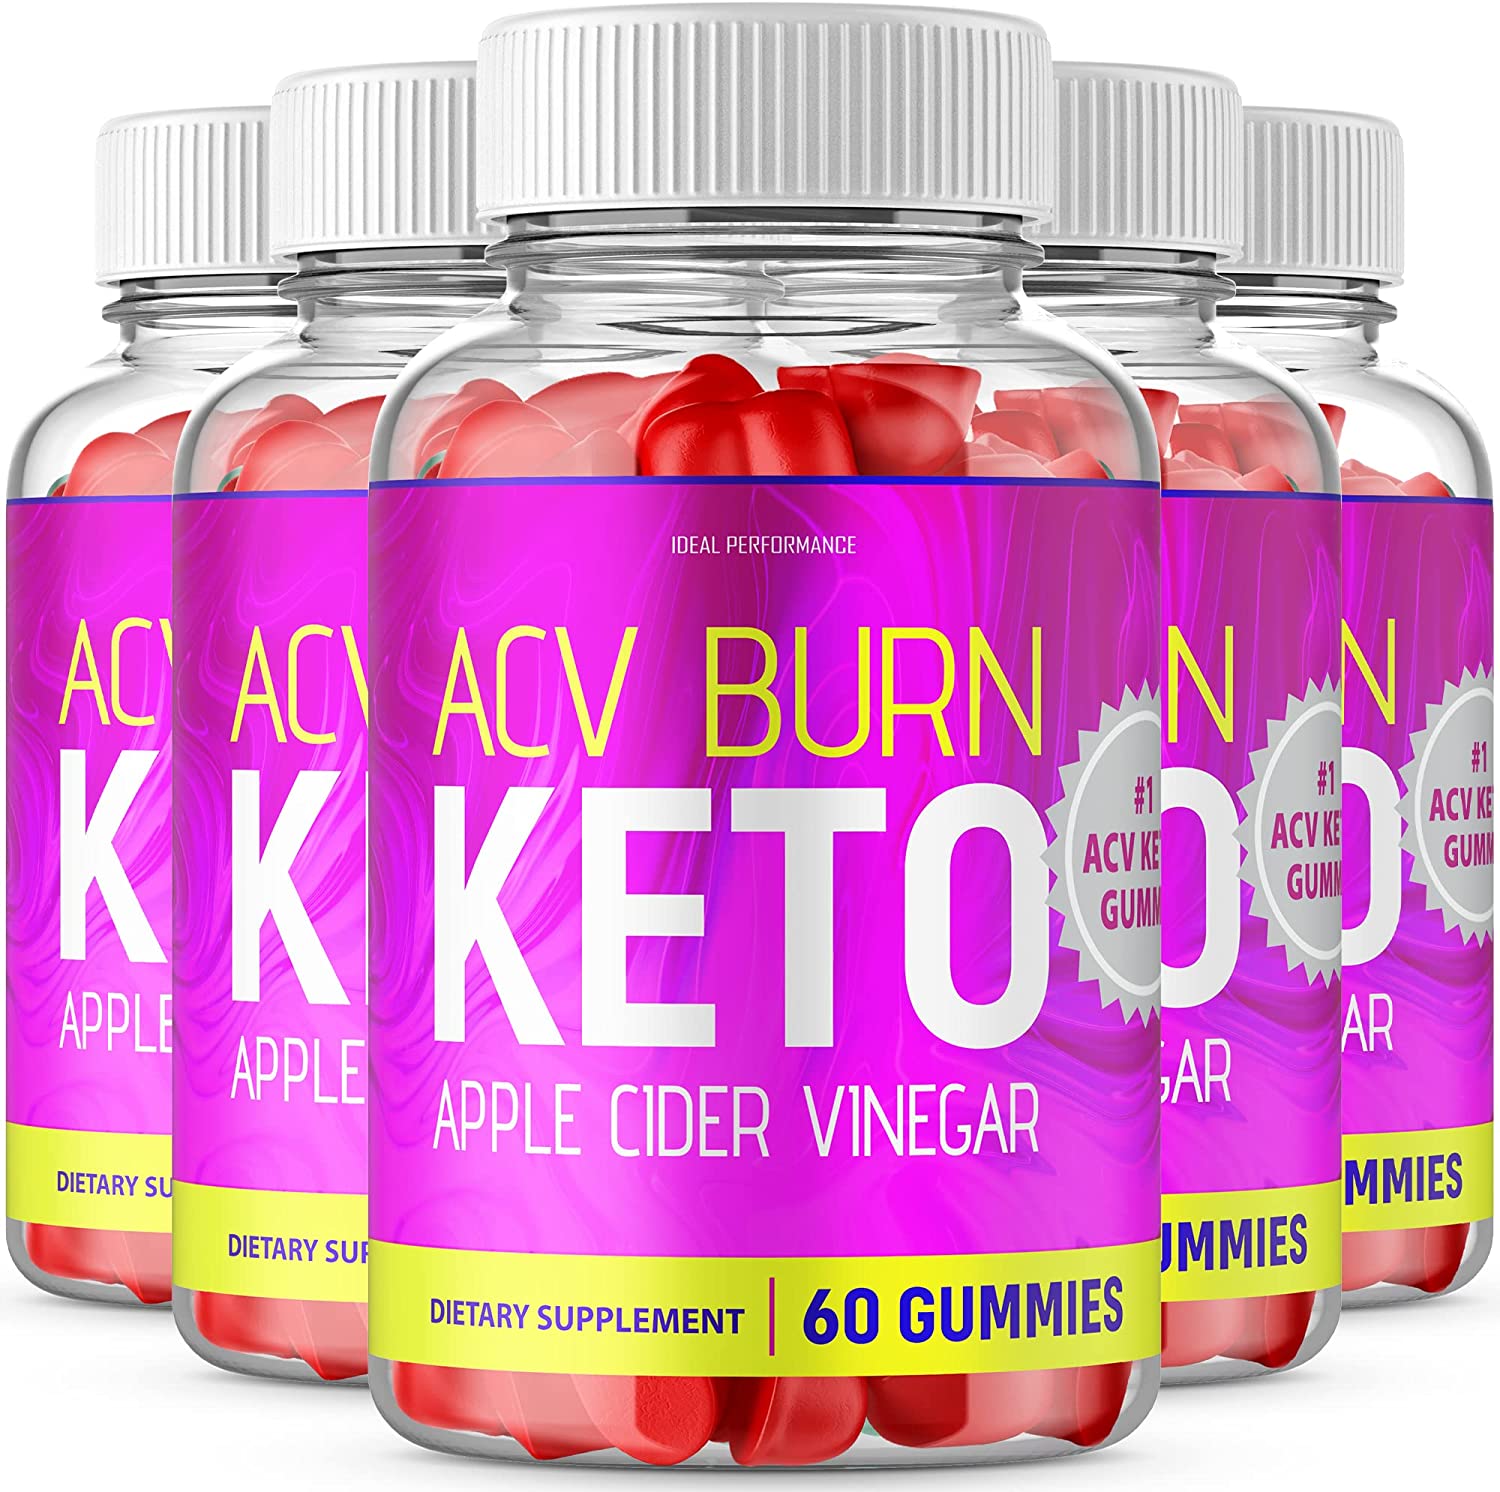 Keto-burn Keto Acv Gummies - où acheter - en pharmacie - prix - sur Amazon - site du fabricant